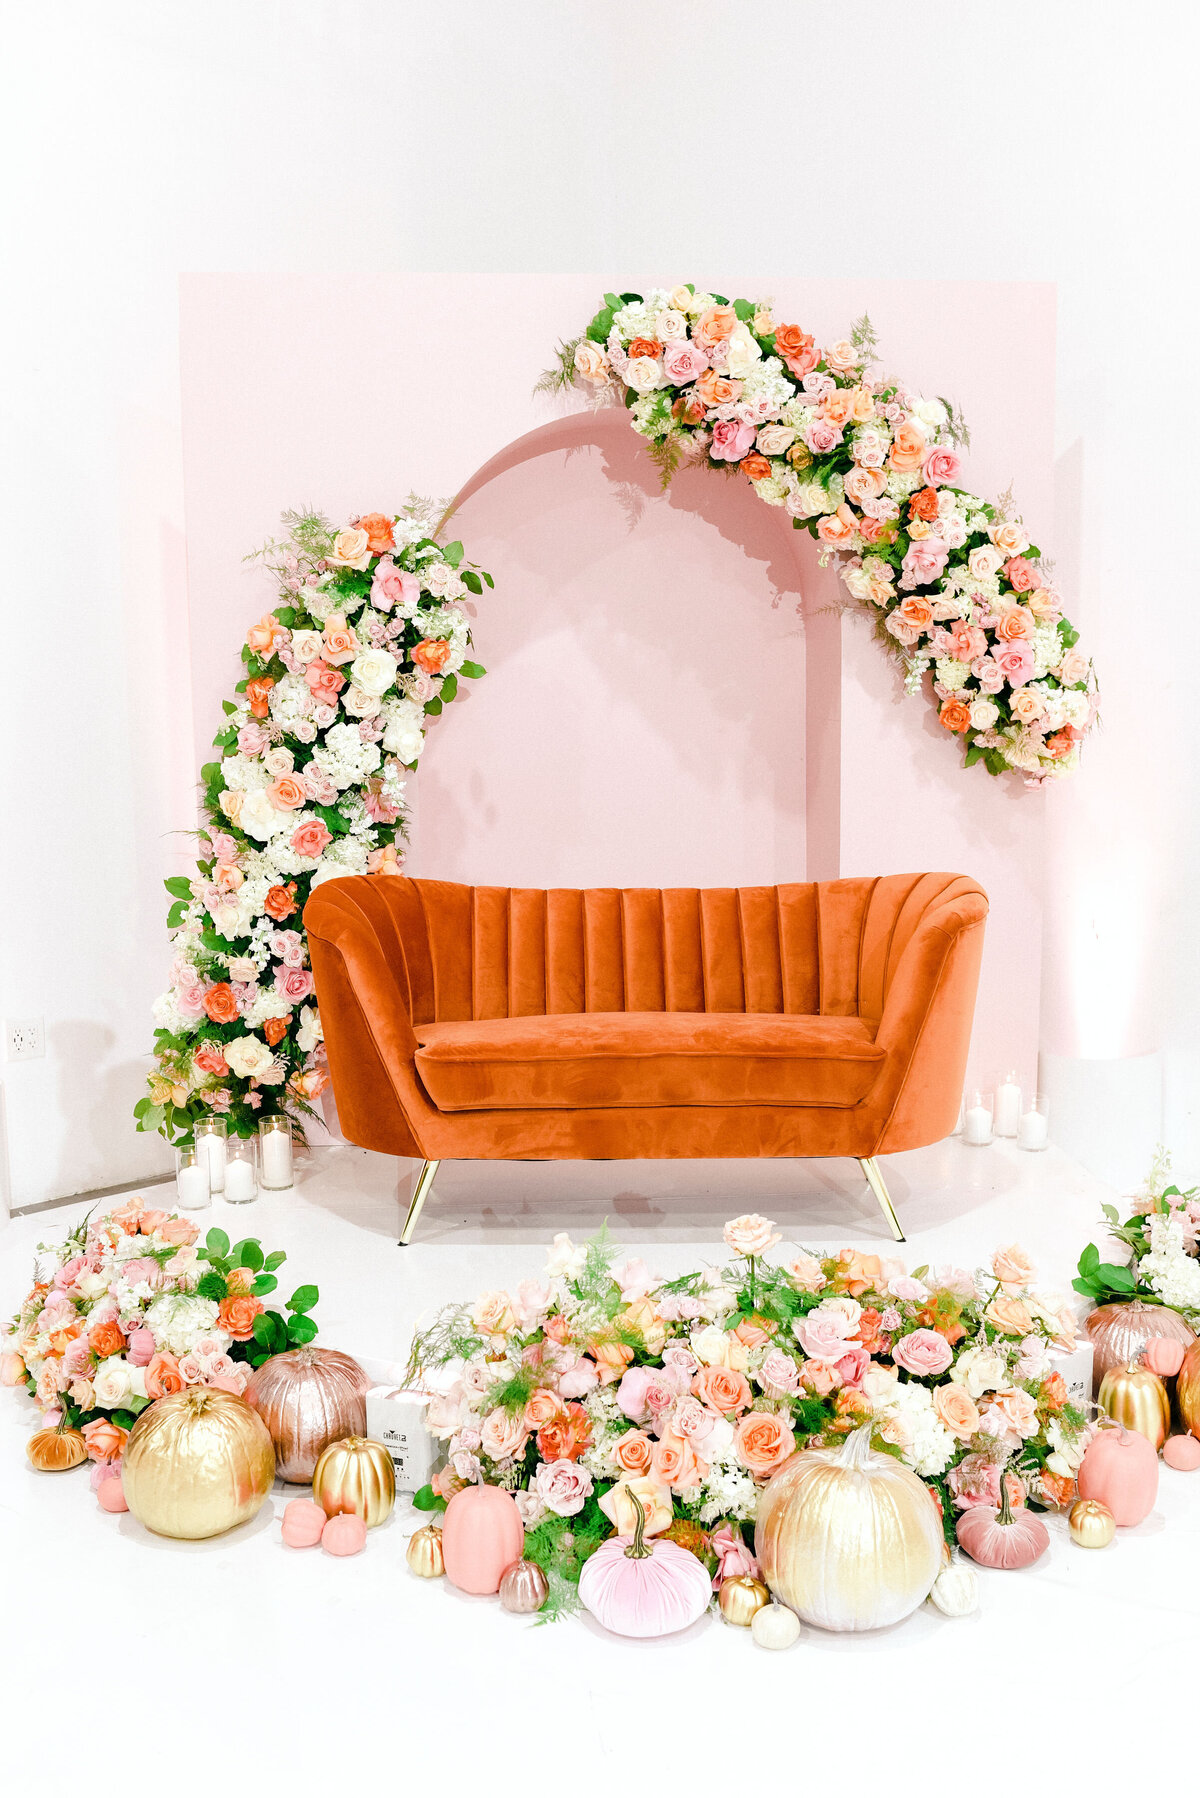 Jayne Heir Weddings and Events - Washington DC Metropolitan Area Wedding and Event Planner - Modern, Stylish, Custom, Top, Best Photo - 3